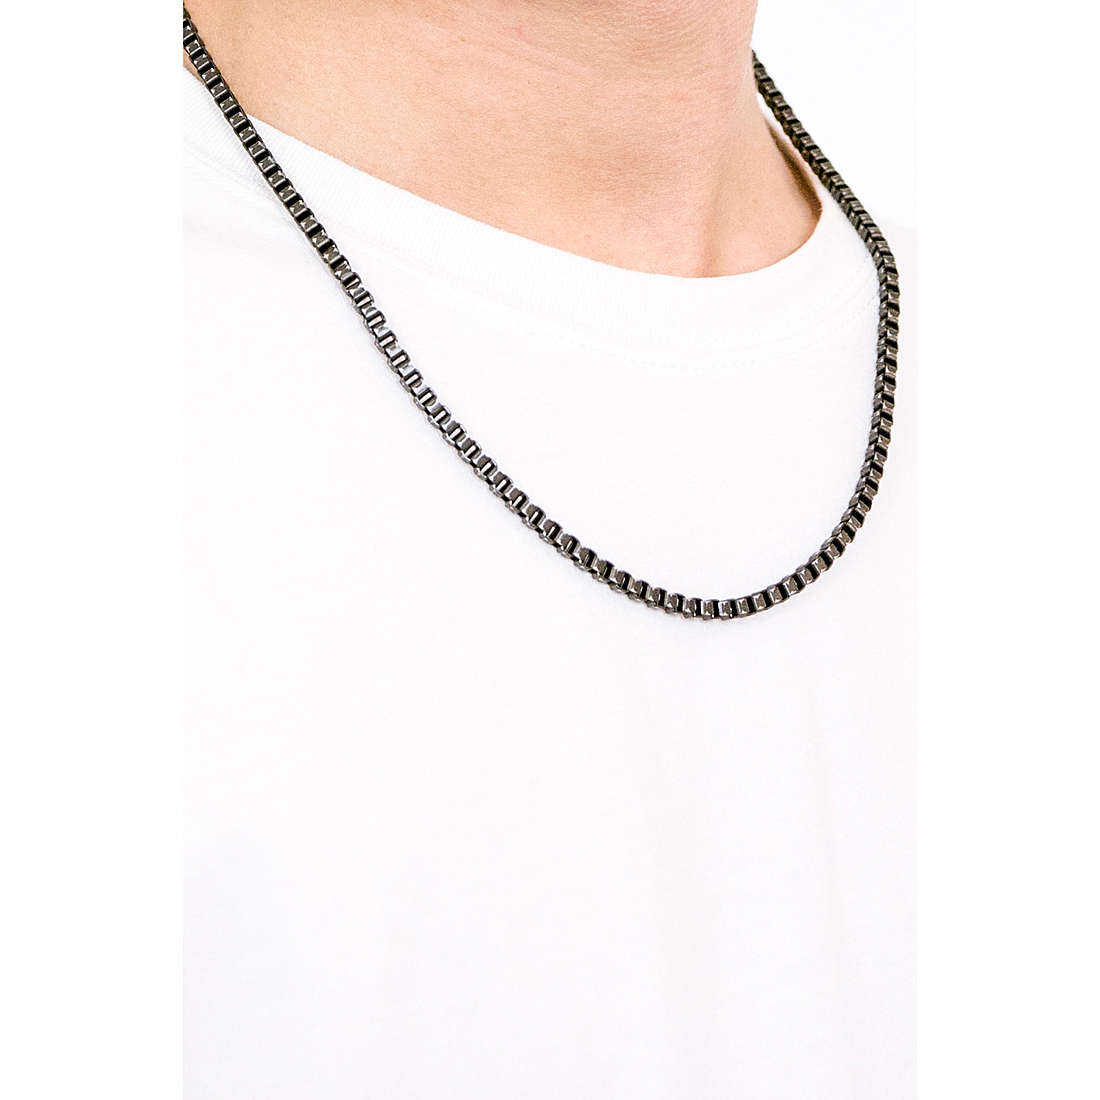 2Jewels necklaces Blockchain man 251737 wearing